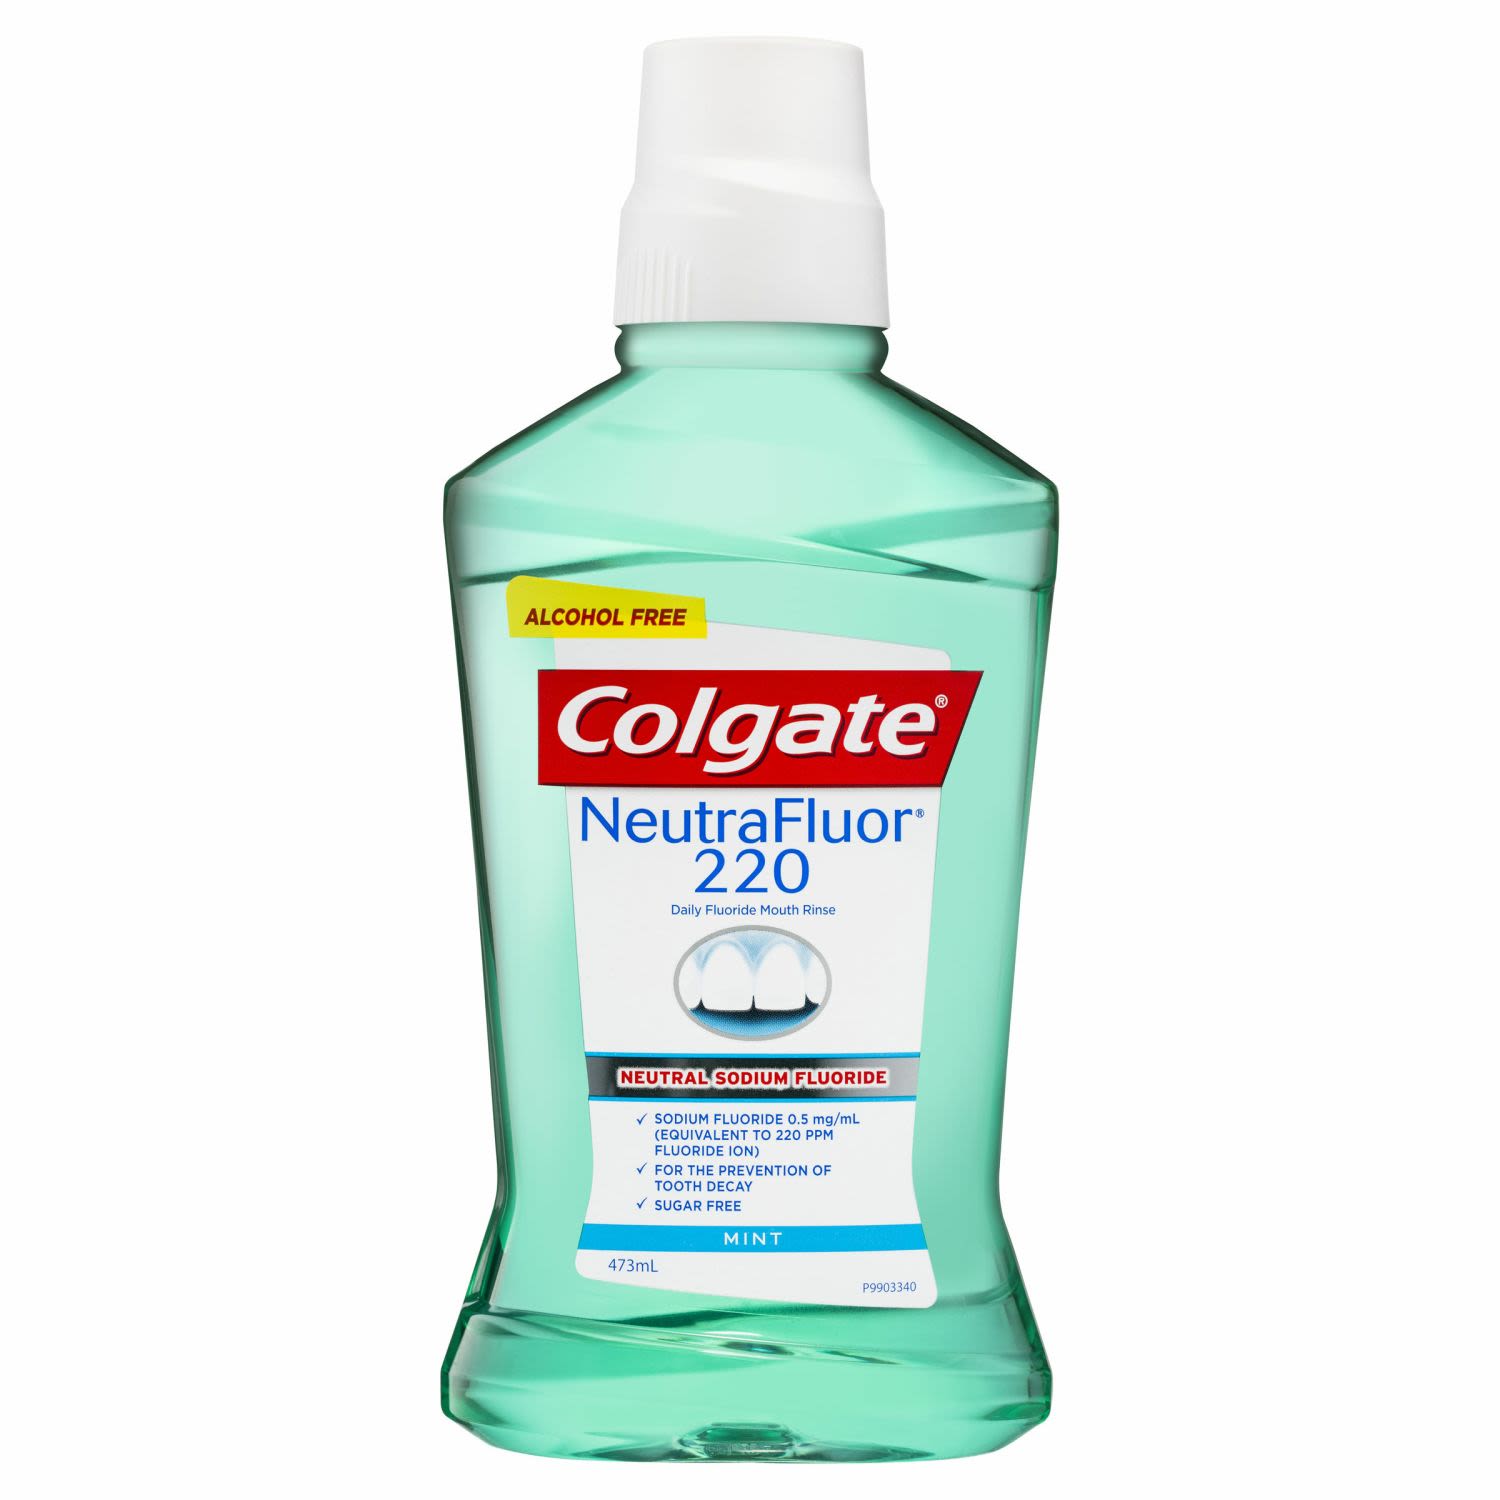 Colgate Neutra Fluor 220 Daily Fluoride Alcohol Free Mouthwash Mint, 473 Millilitre